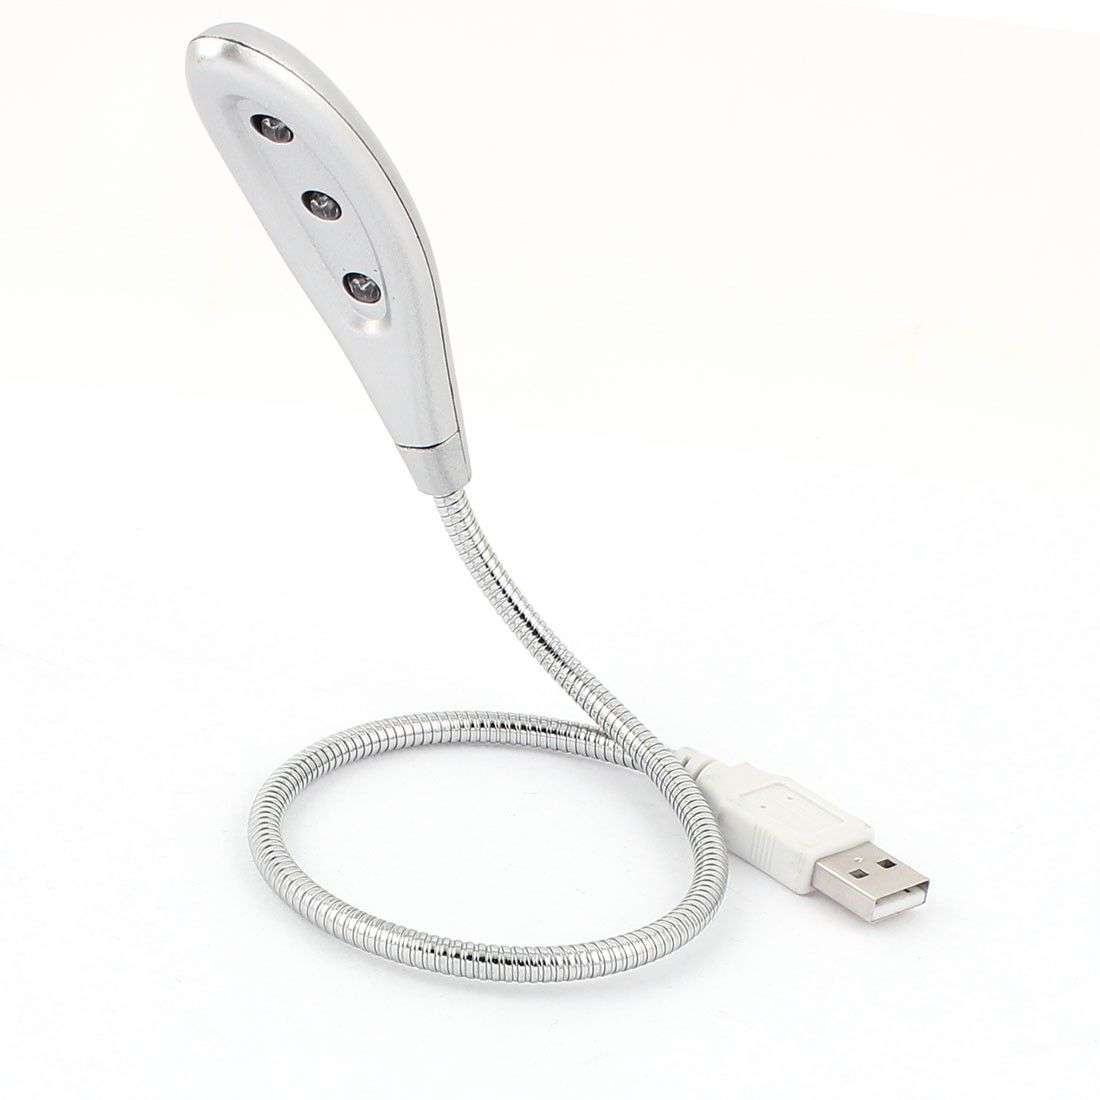 Home Desktop Portable Flexible Goose Neck USB 3 LEDS Light for Notebook Laptop  Silver